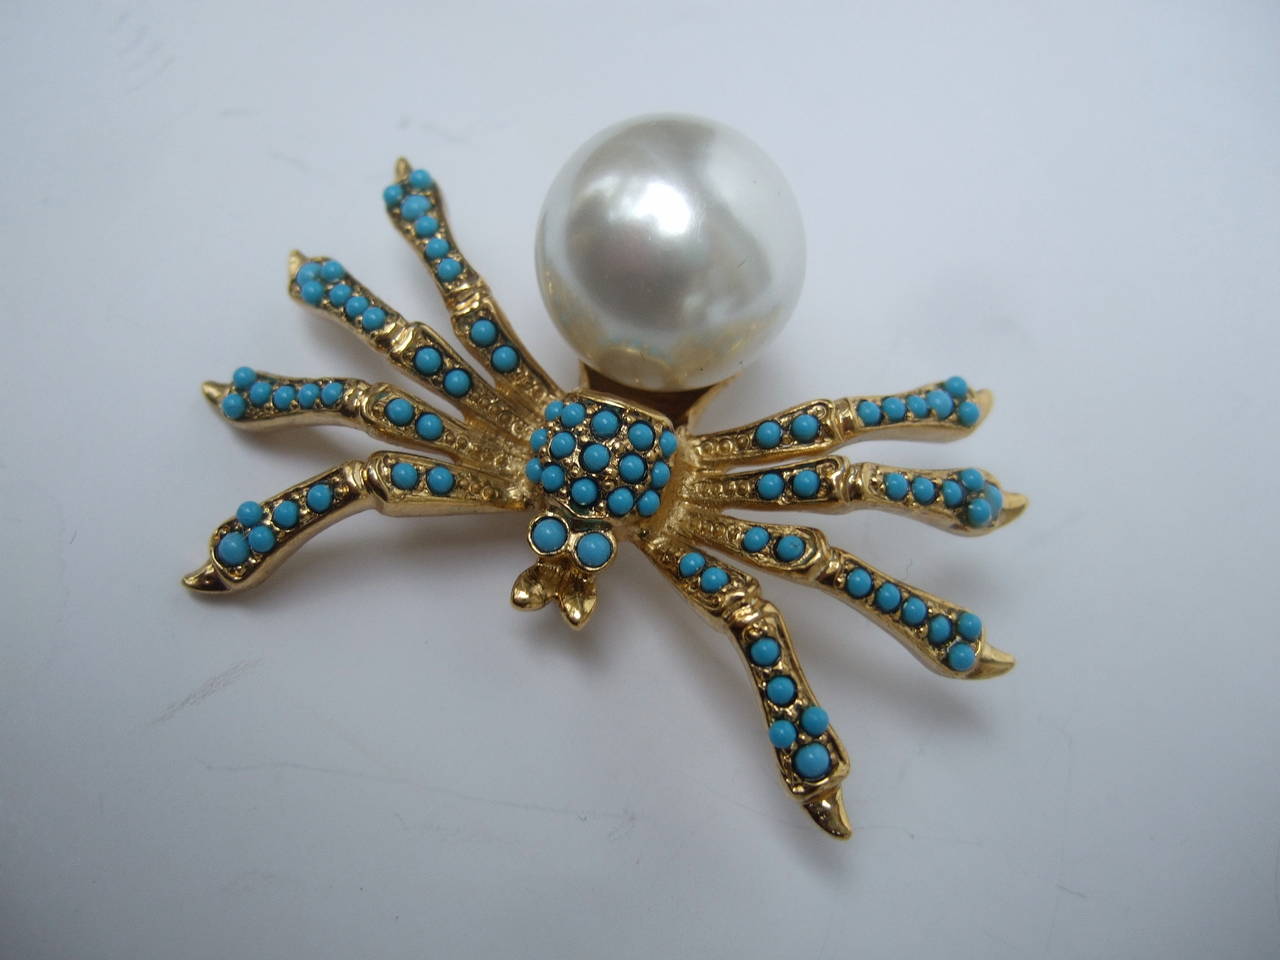 Kenneth Lane Jeweled Spider Brooch c 1990s 1